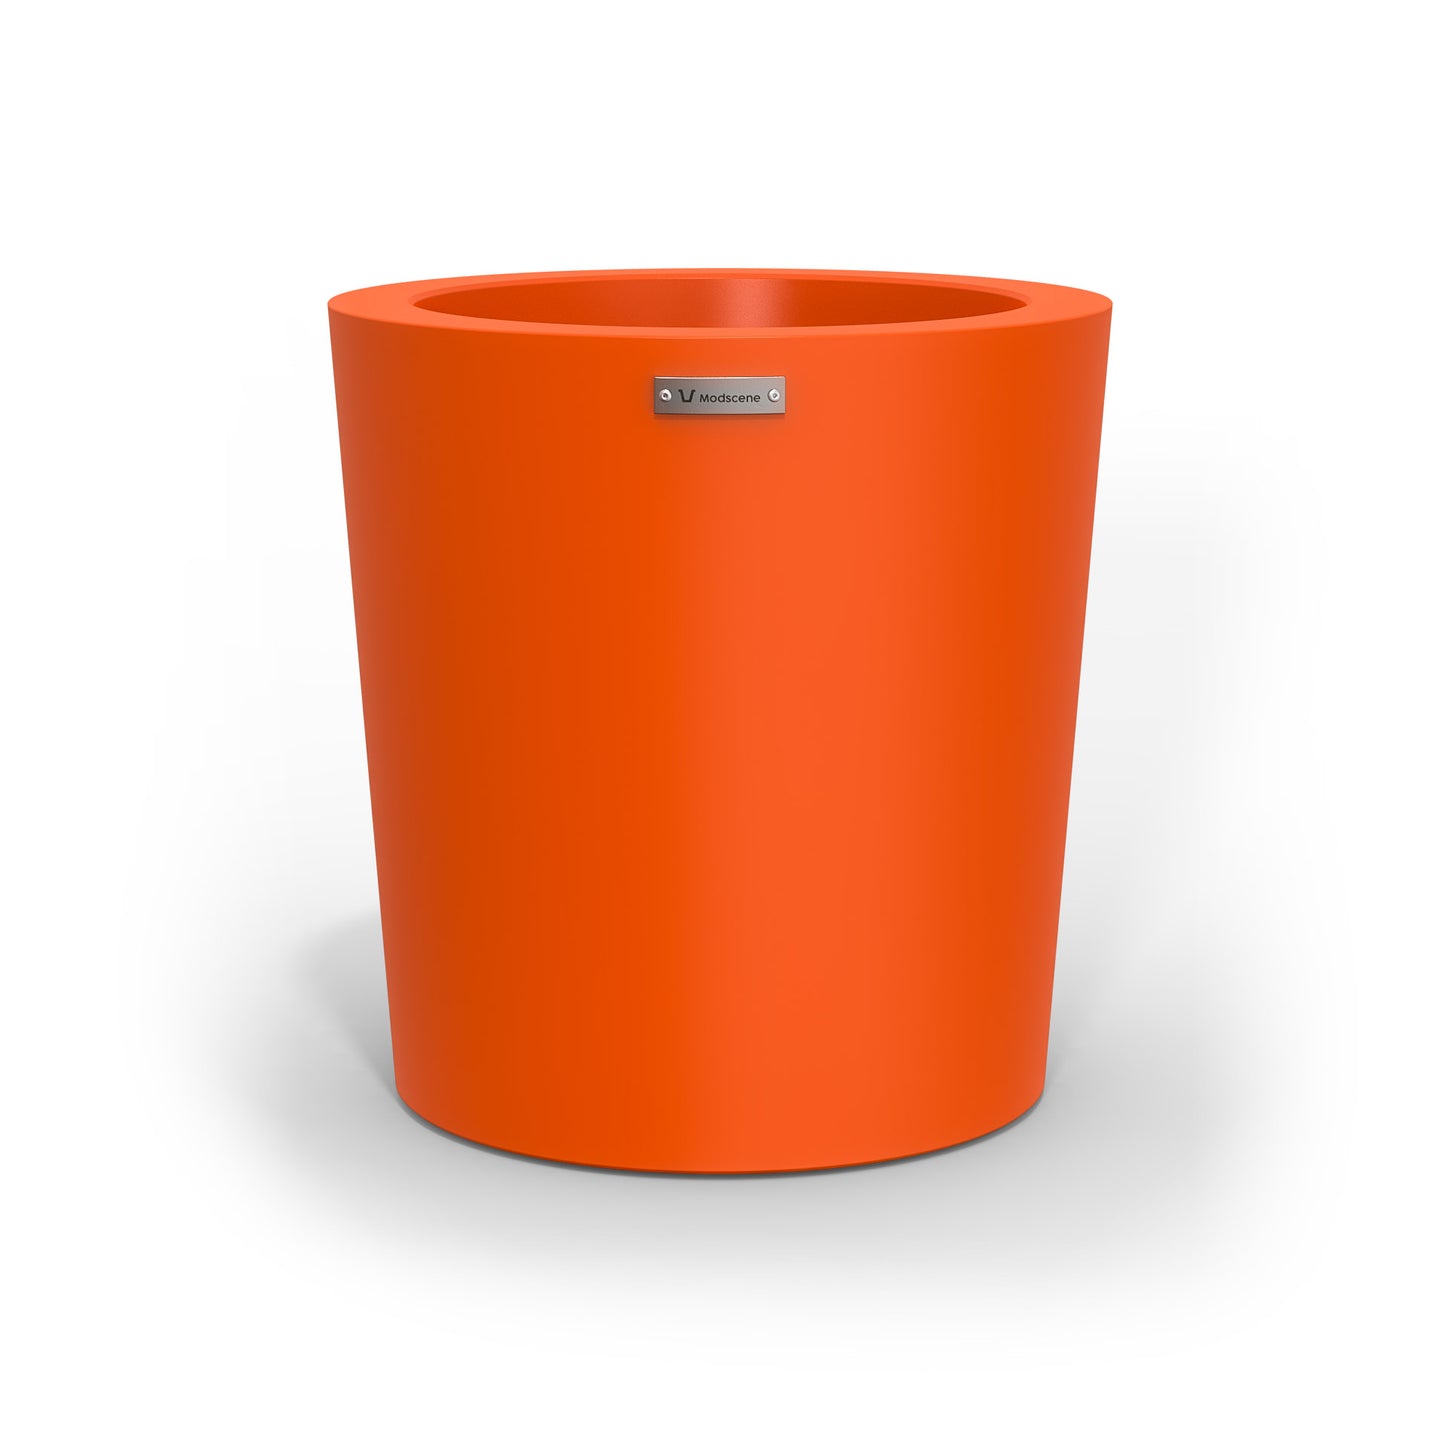 A modern designer planter pot in a orange colour. 